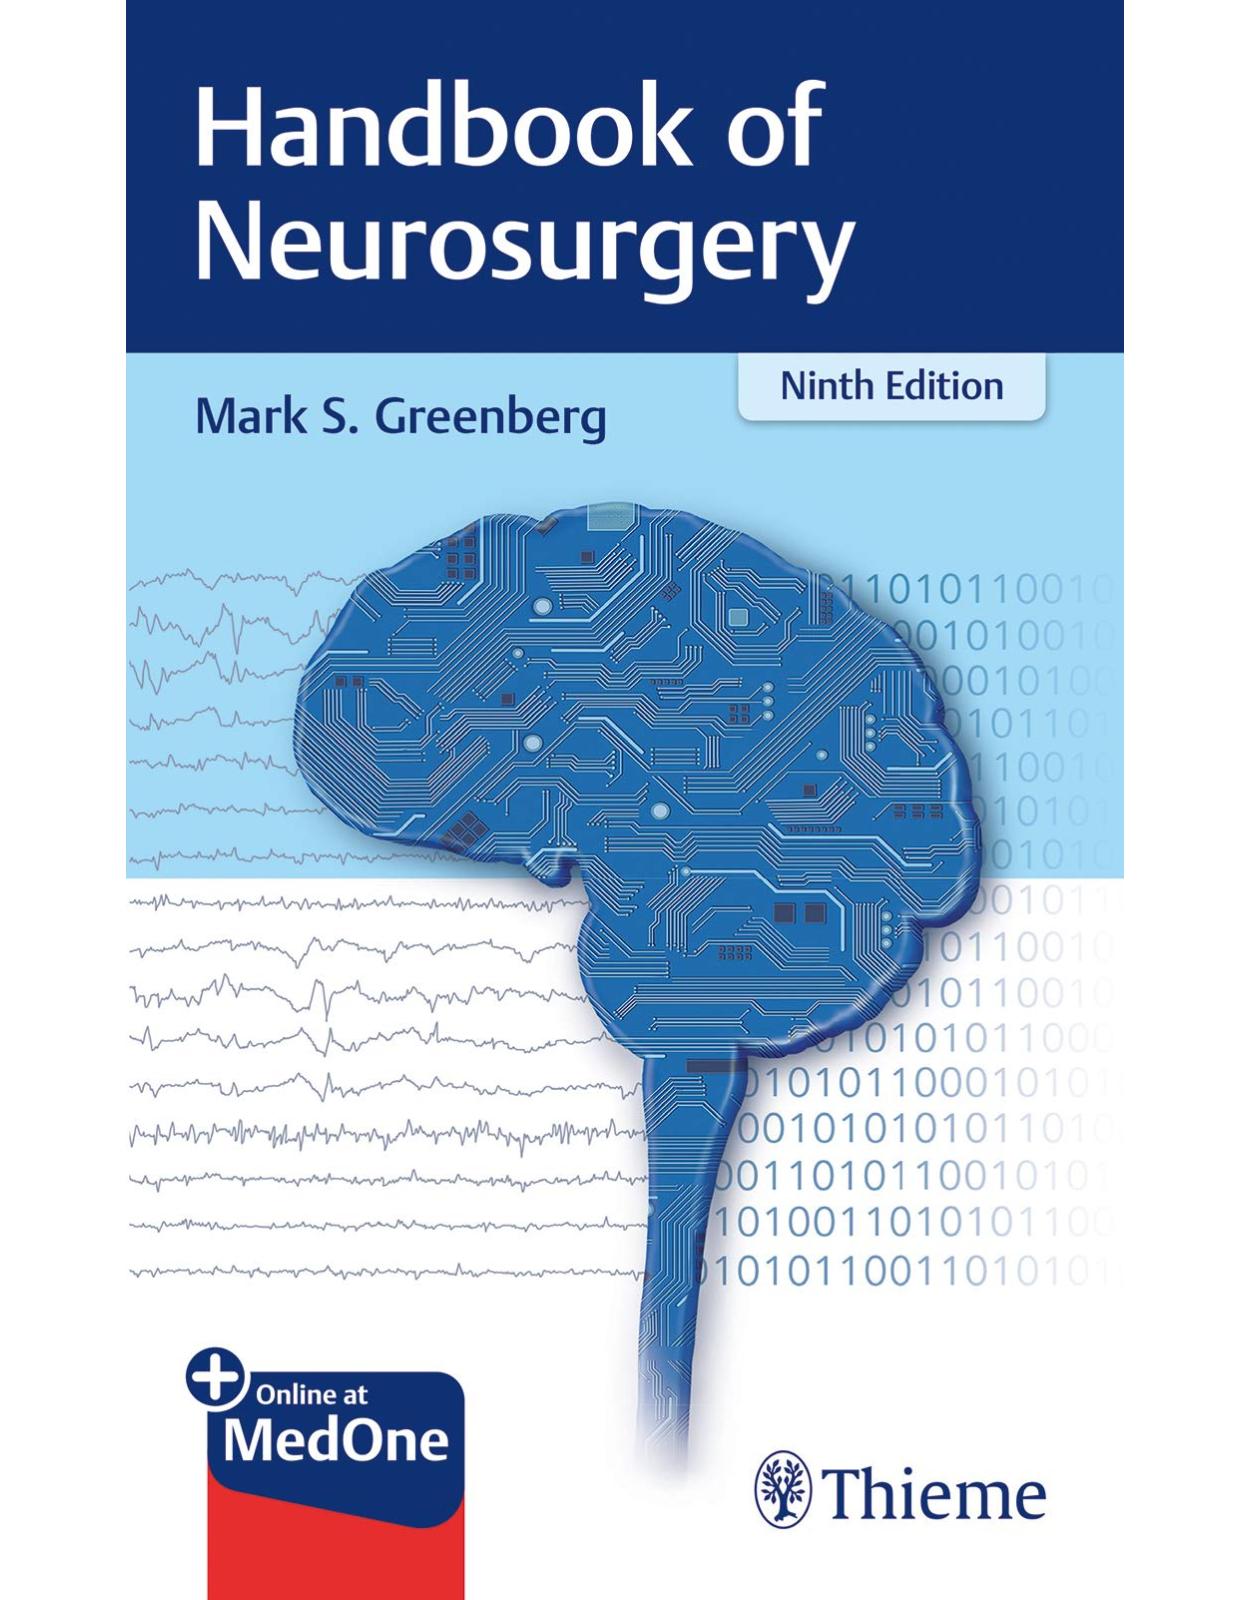 Handbook of Neurosurgery, 9th Edition